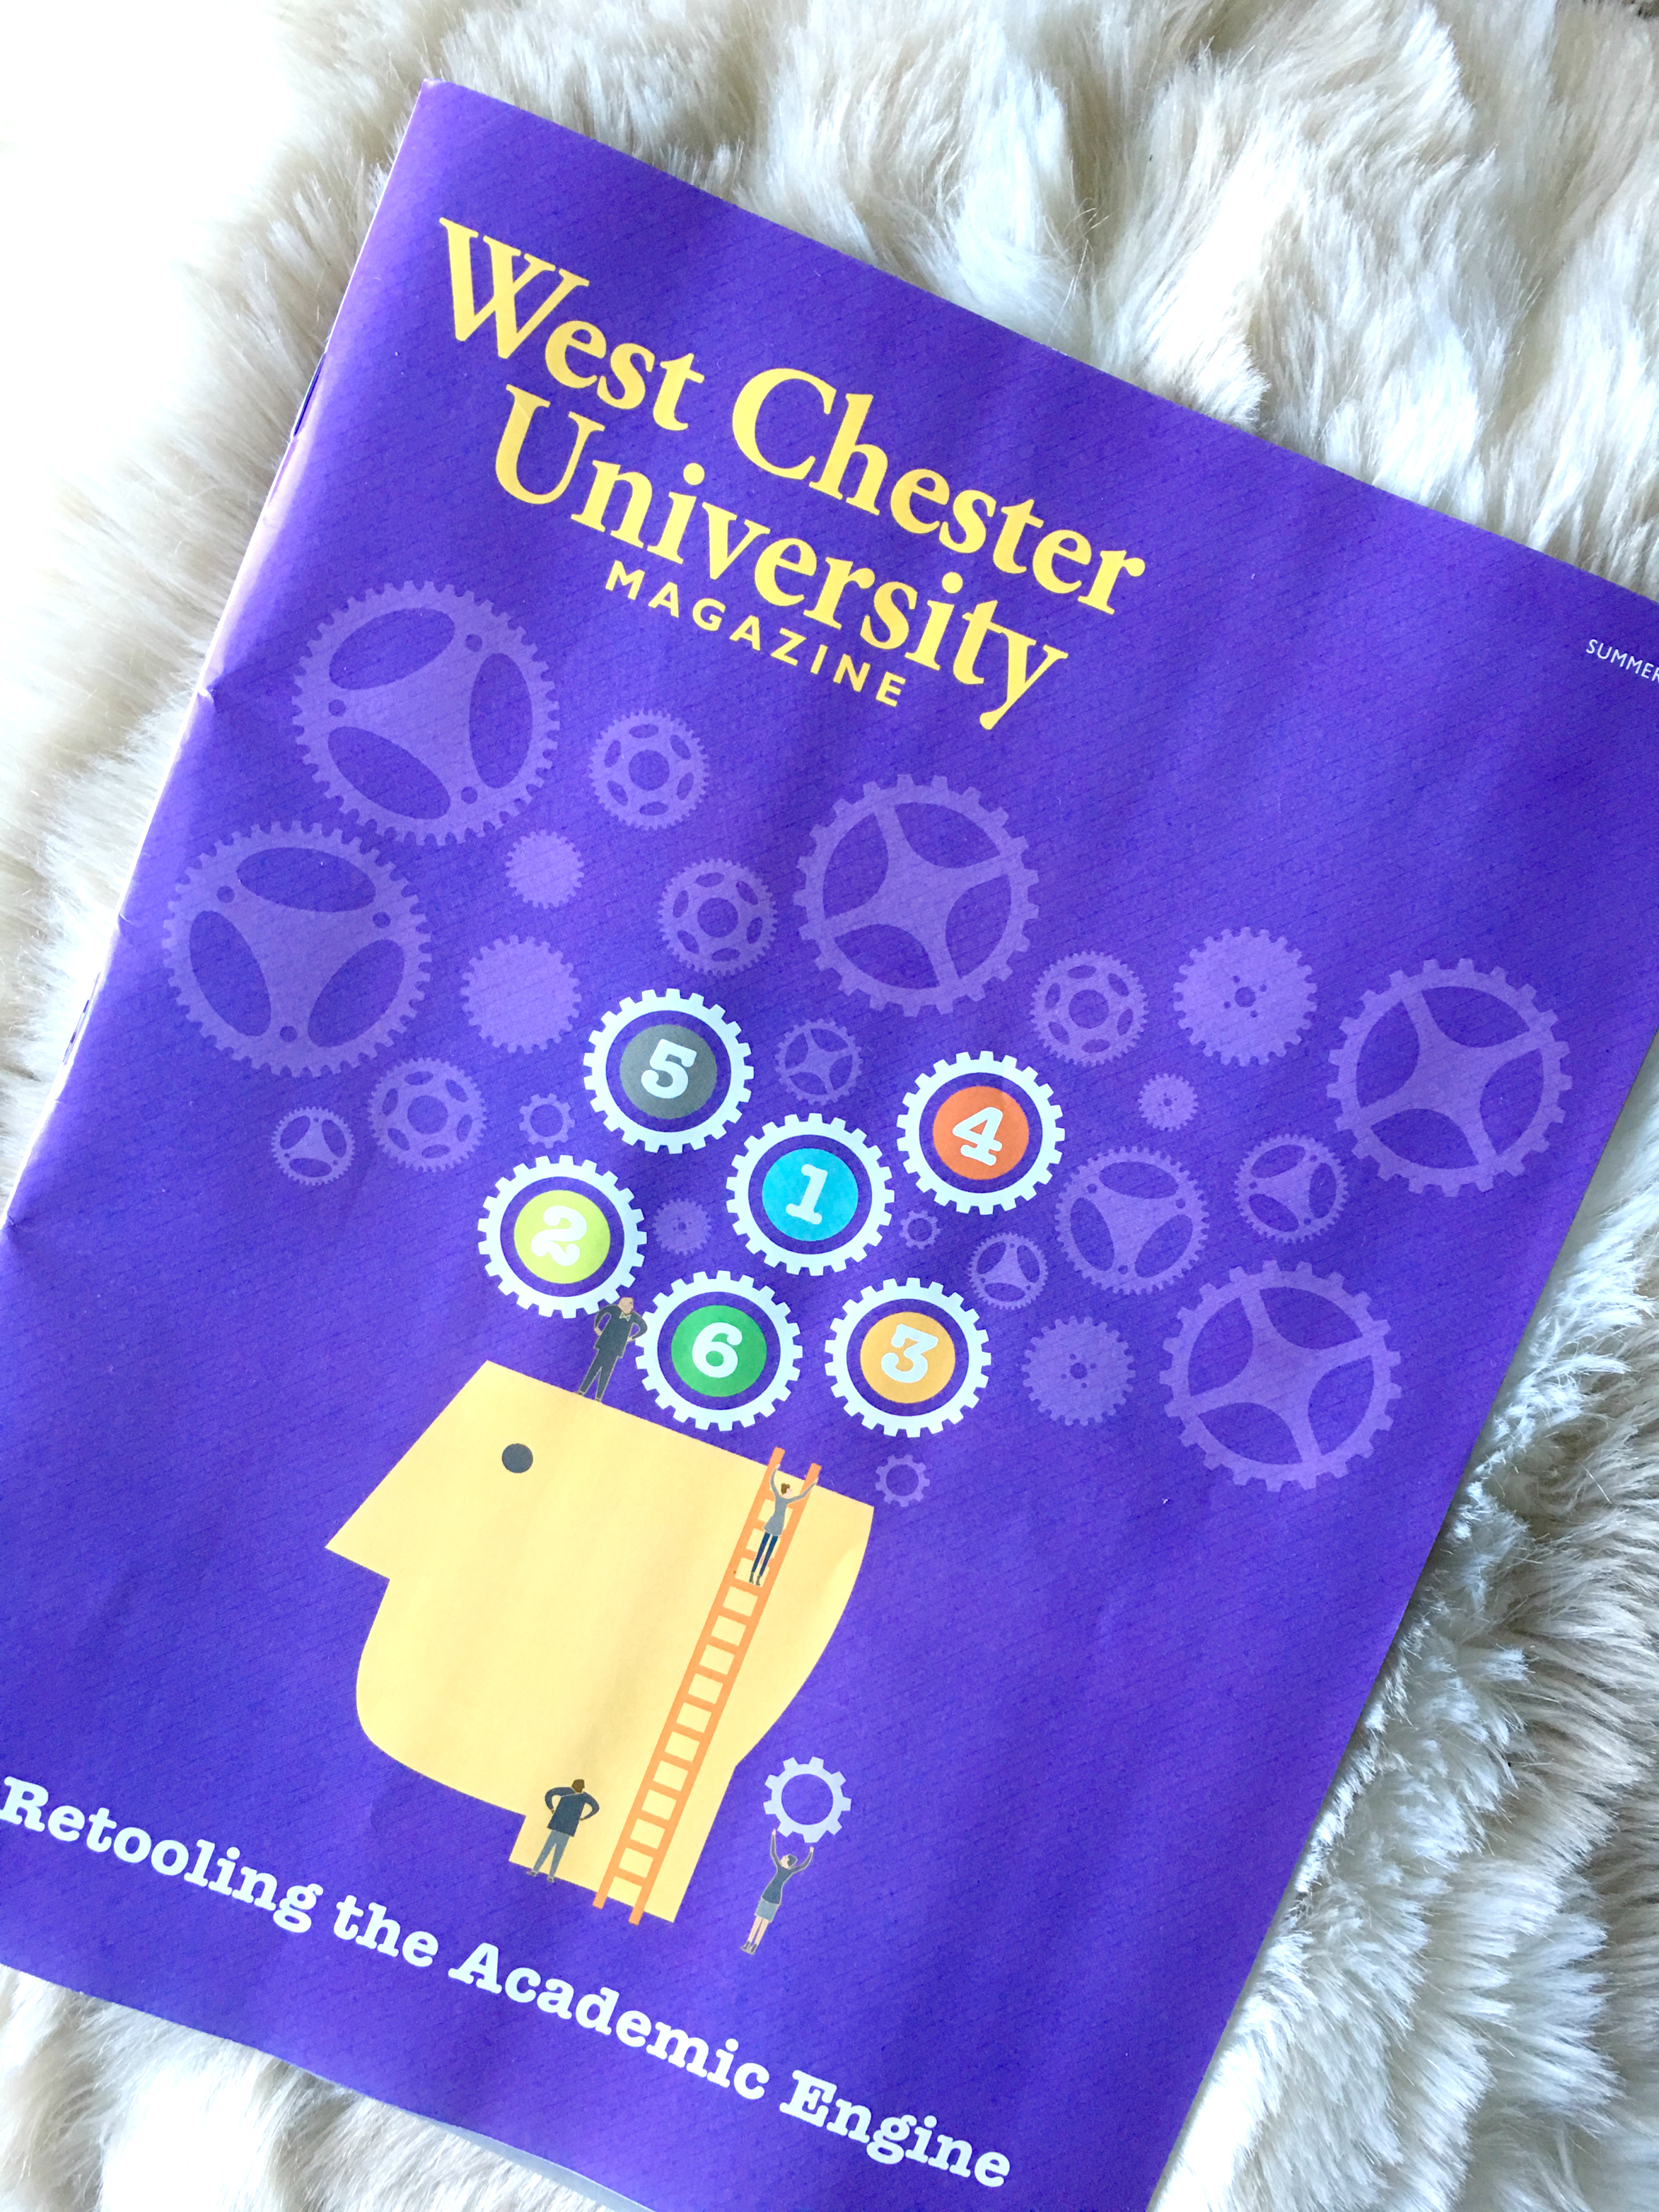 west chester university magazine